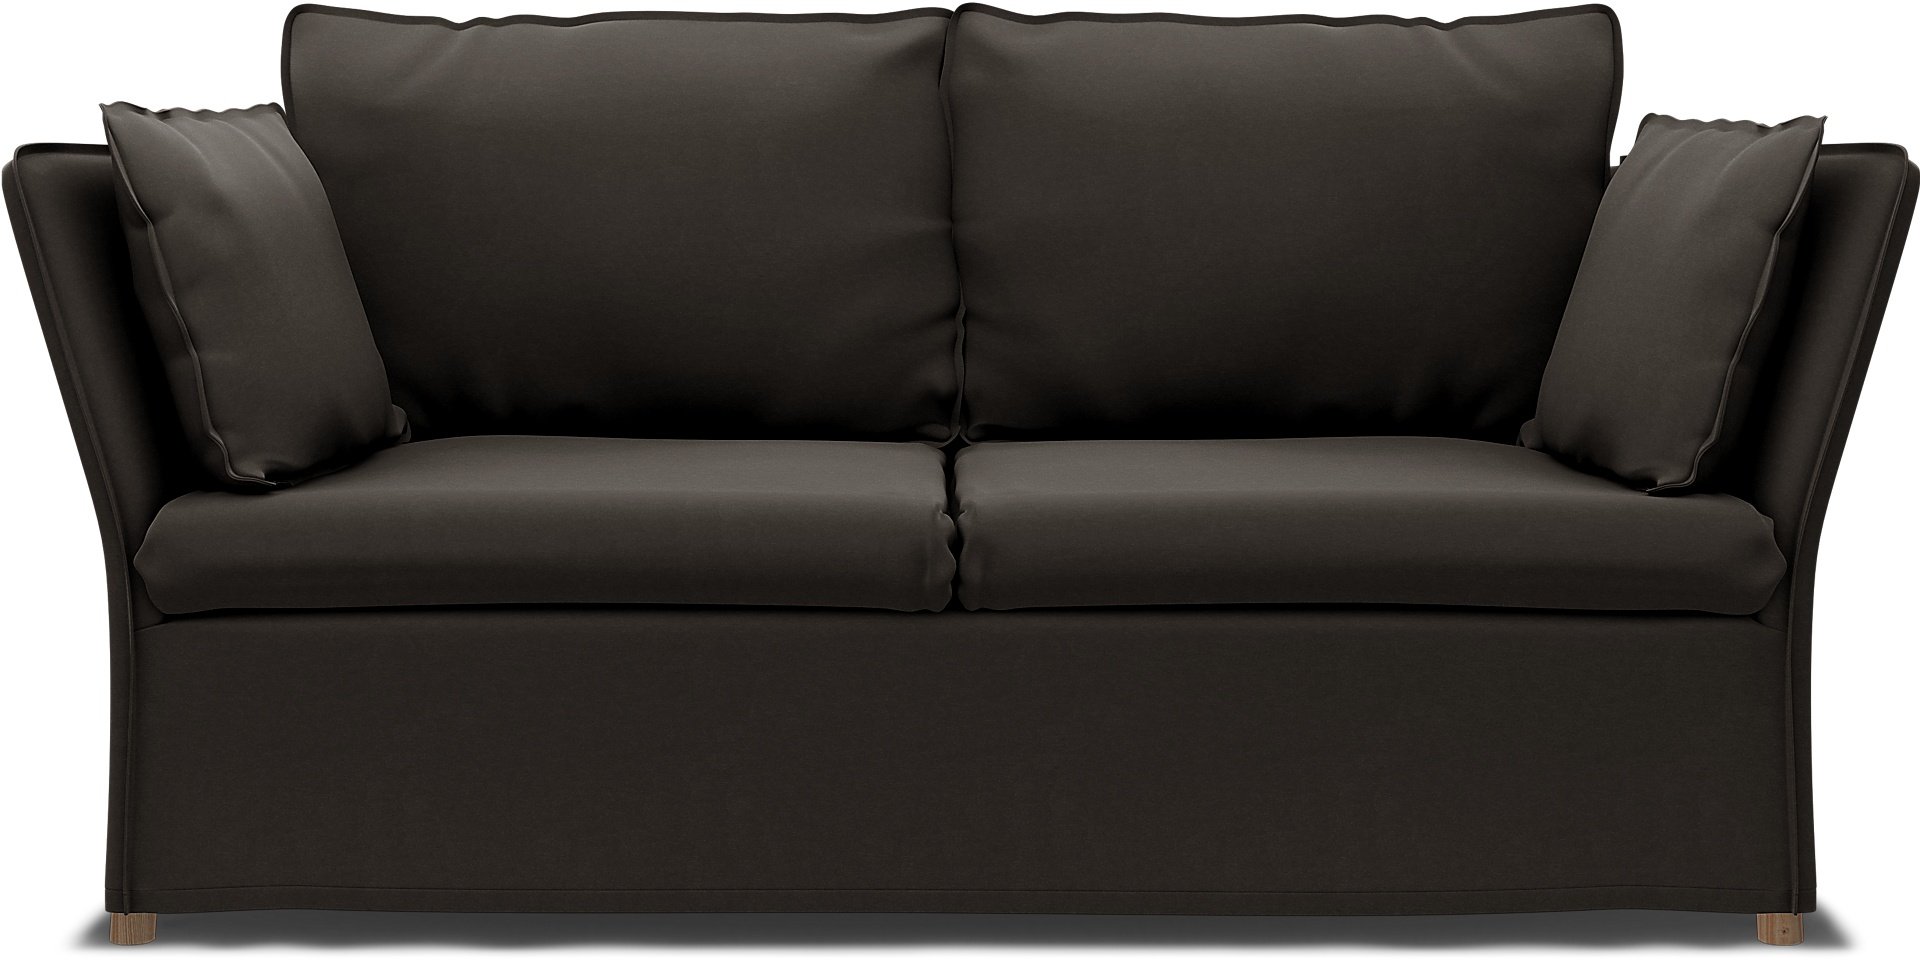 IKEA - Backsalen 2 seater sofa, Licorice, Velvet - Bemz